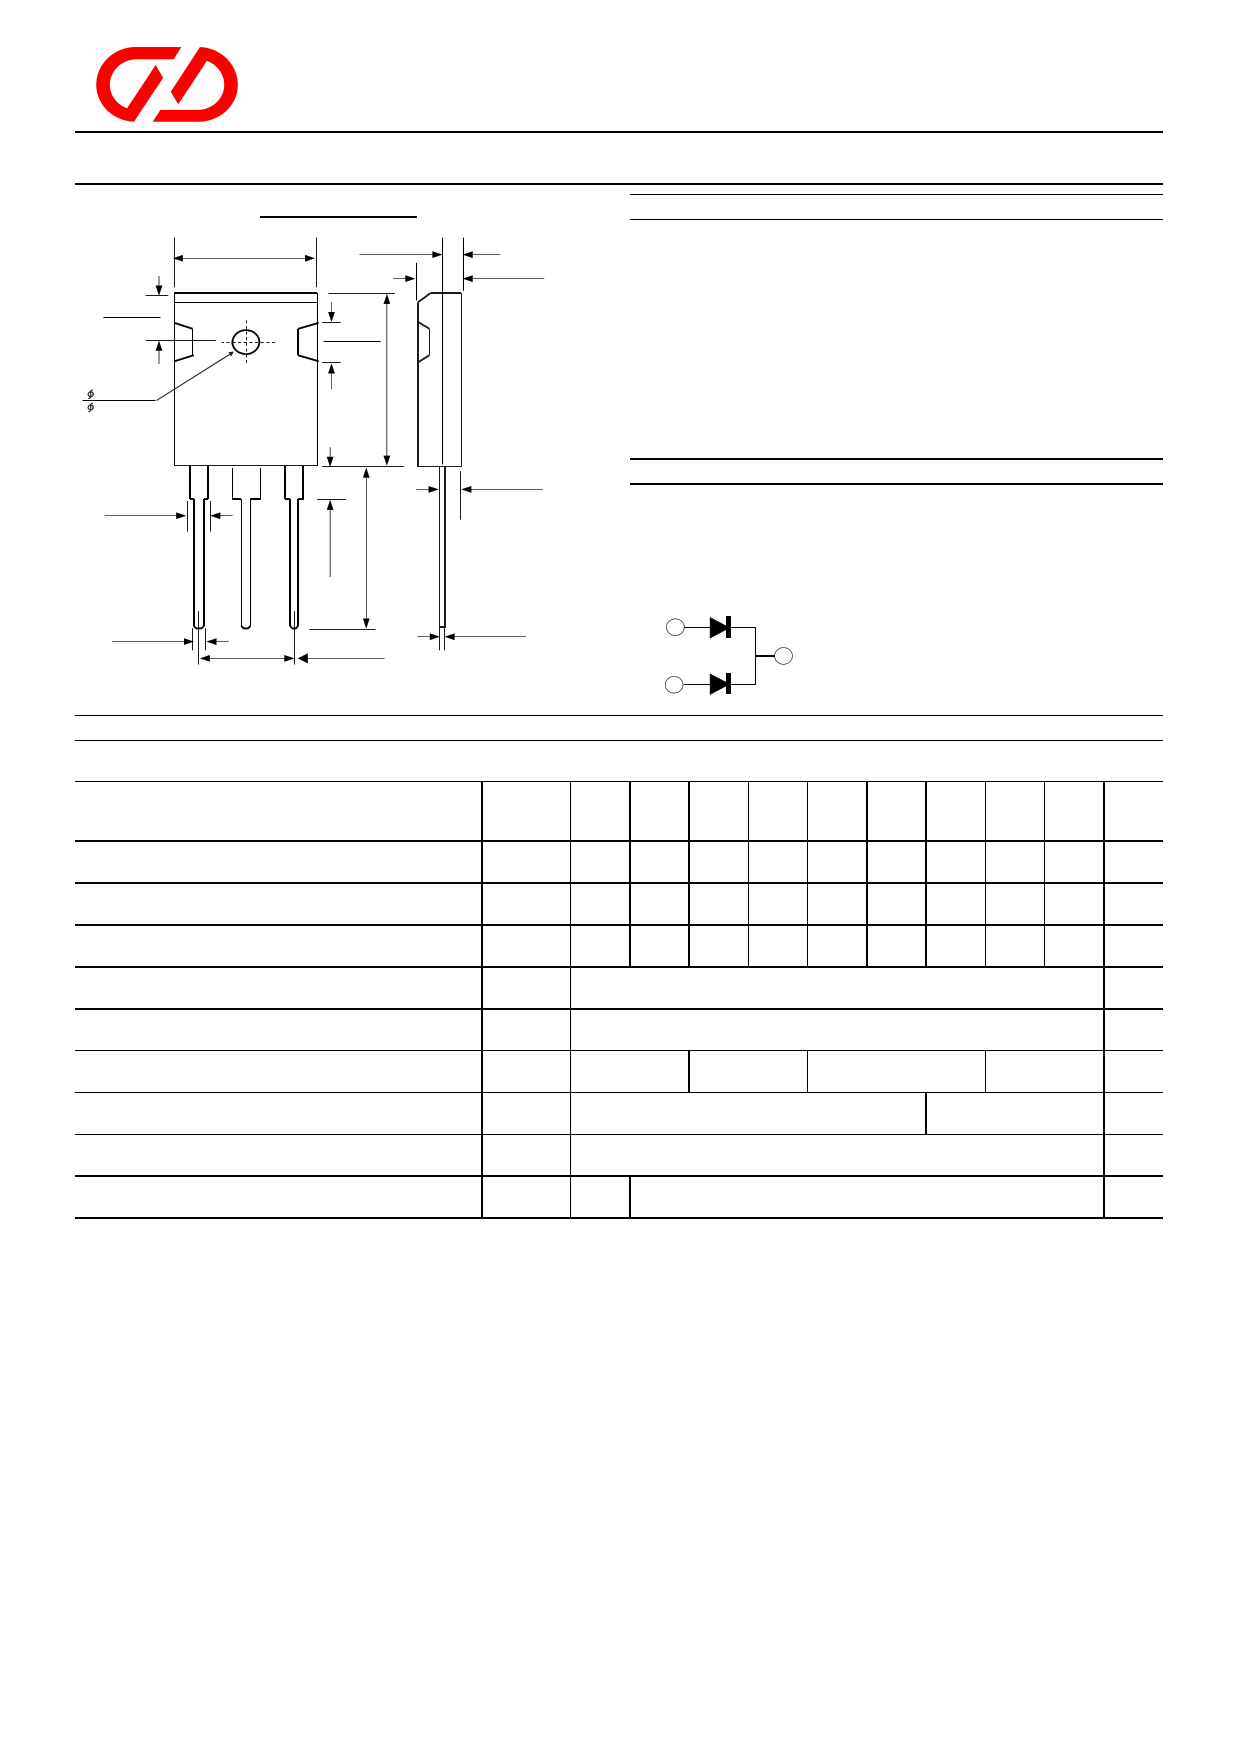 MBR3060PT datasheet, circuit